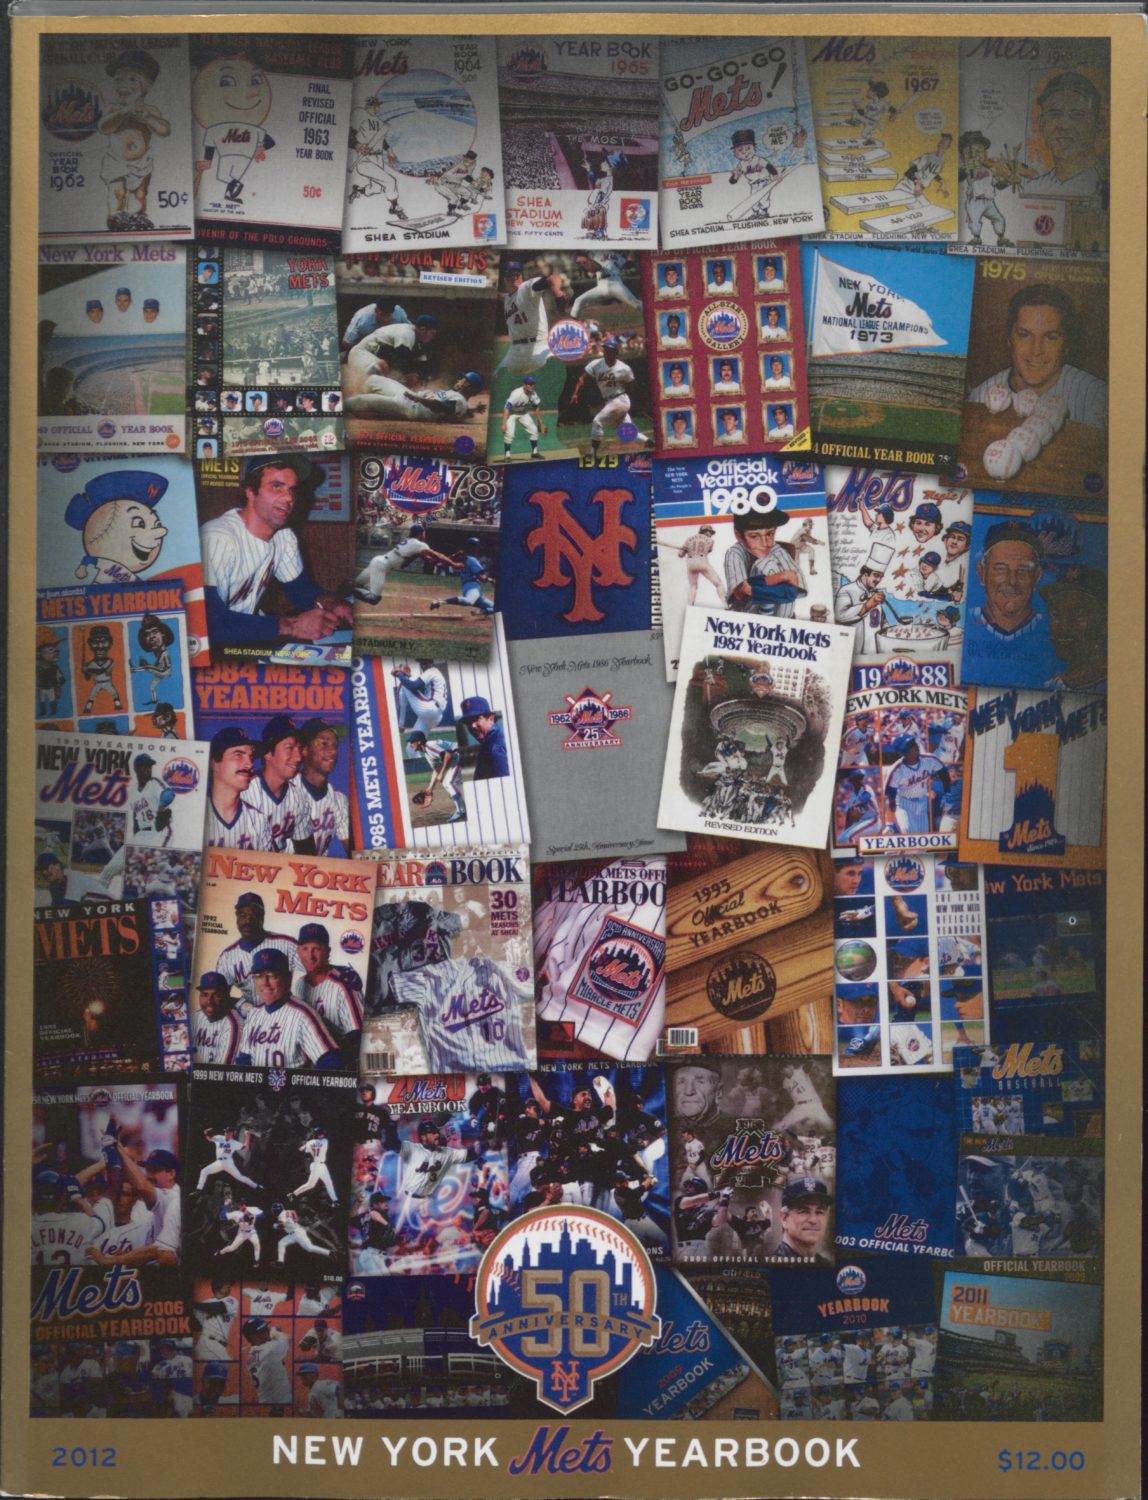 2012 New York Mets Yearbook: Celebrating 50 Years